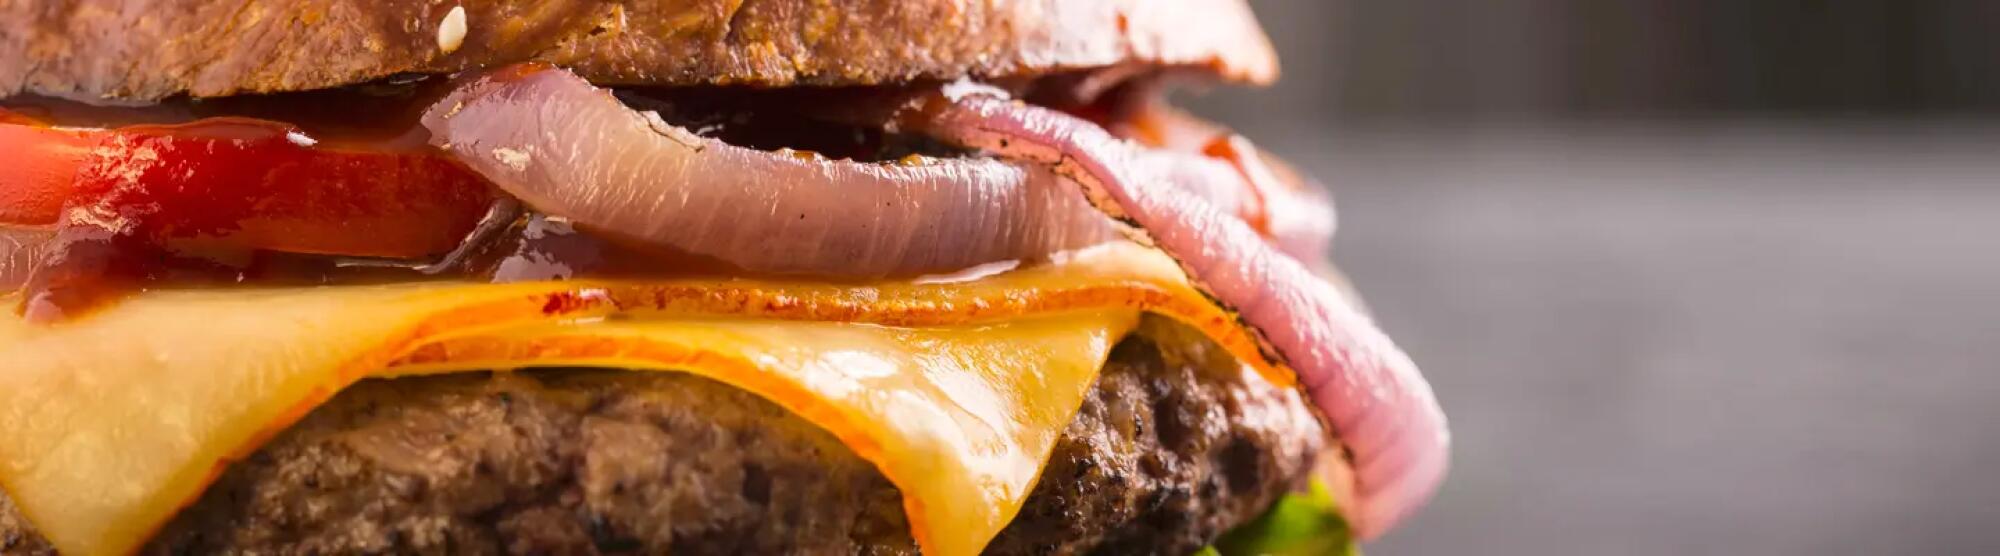 Recette : Hamburger maison au fromage, sauce barbecue